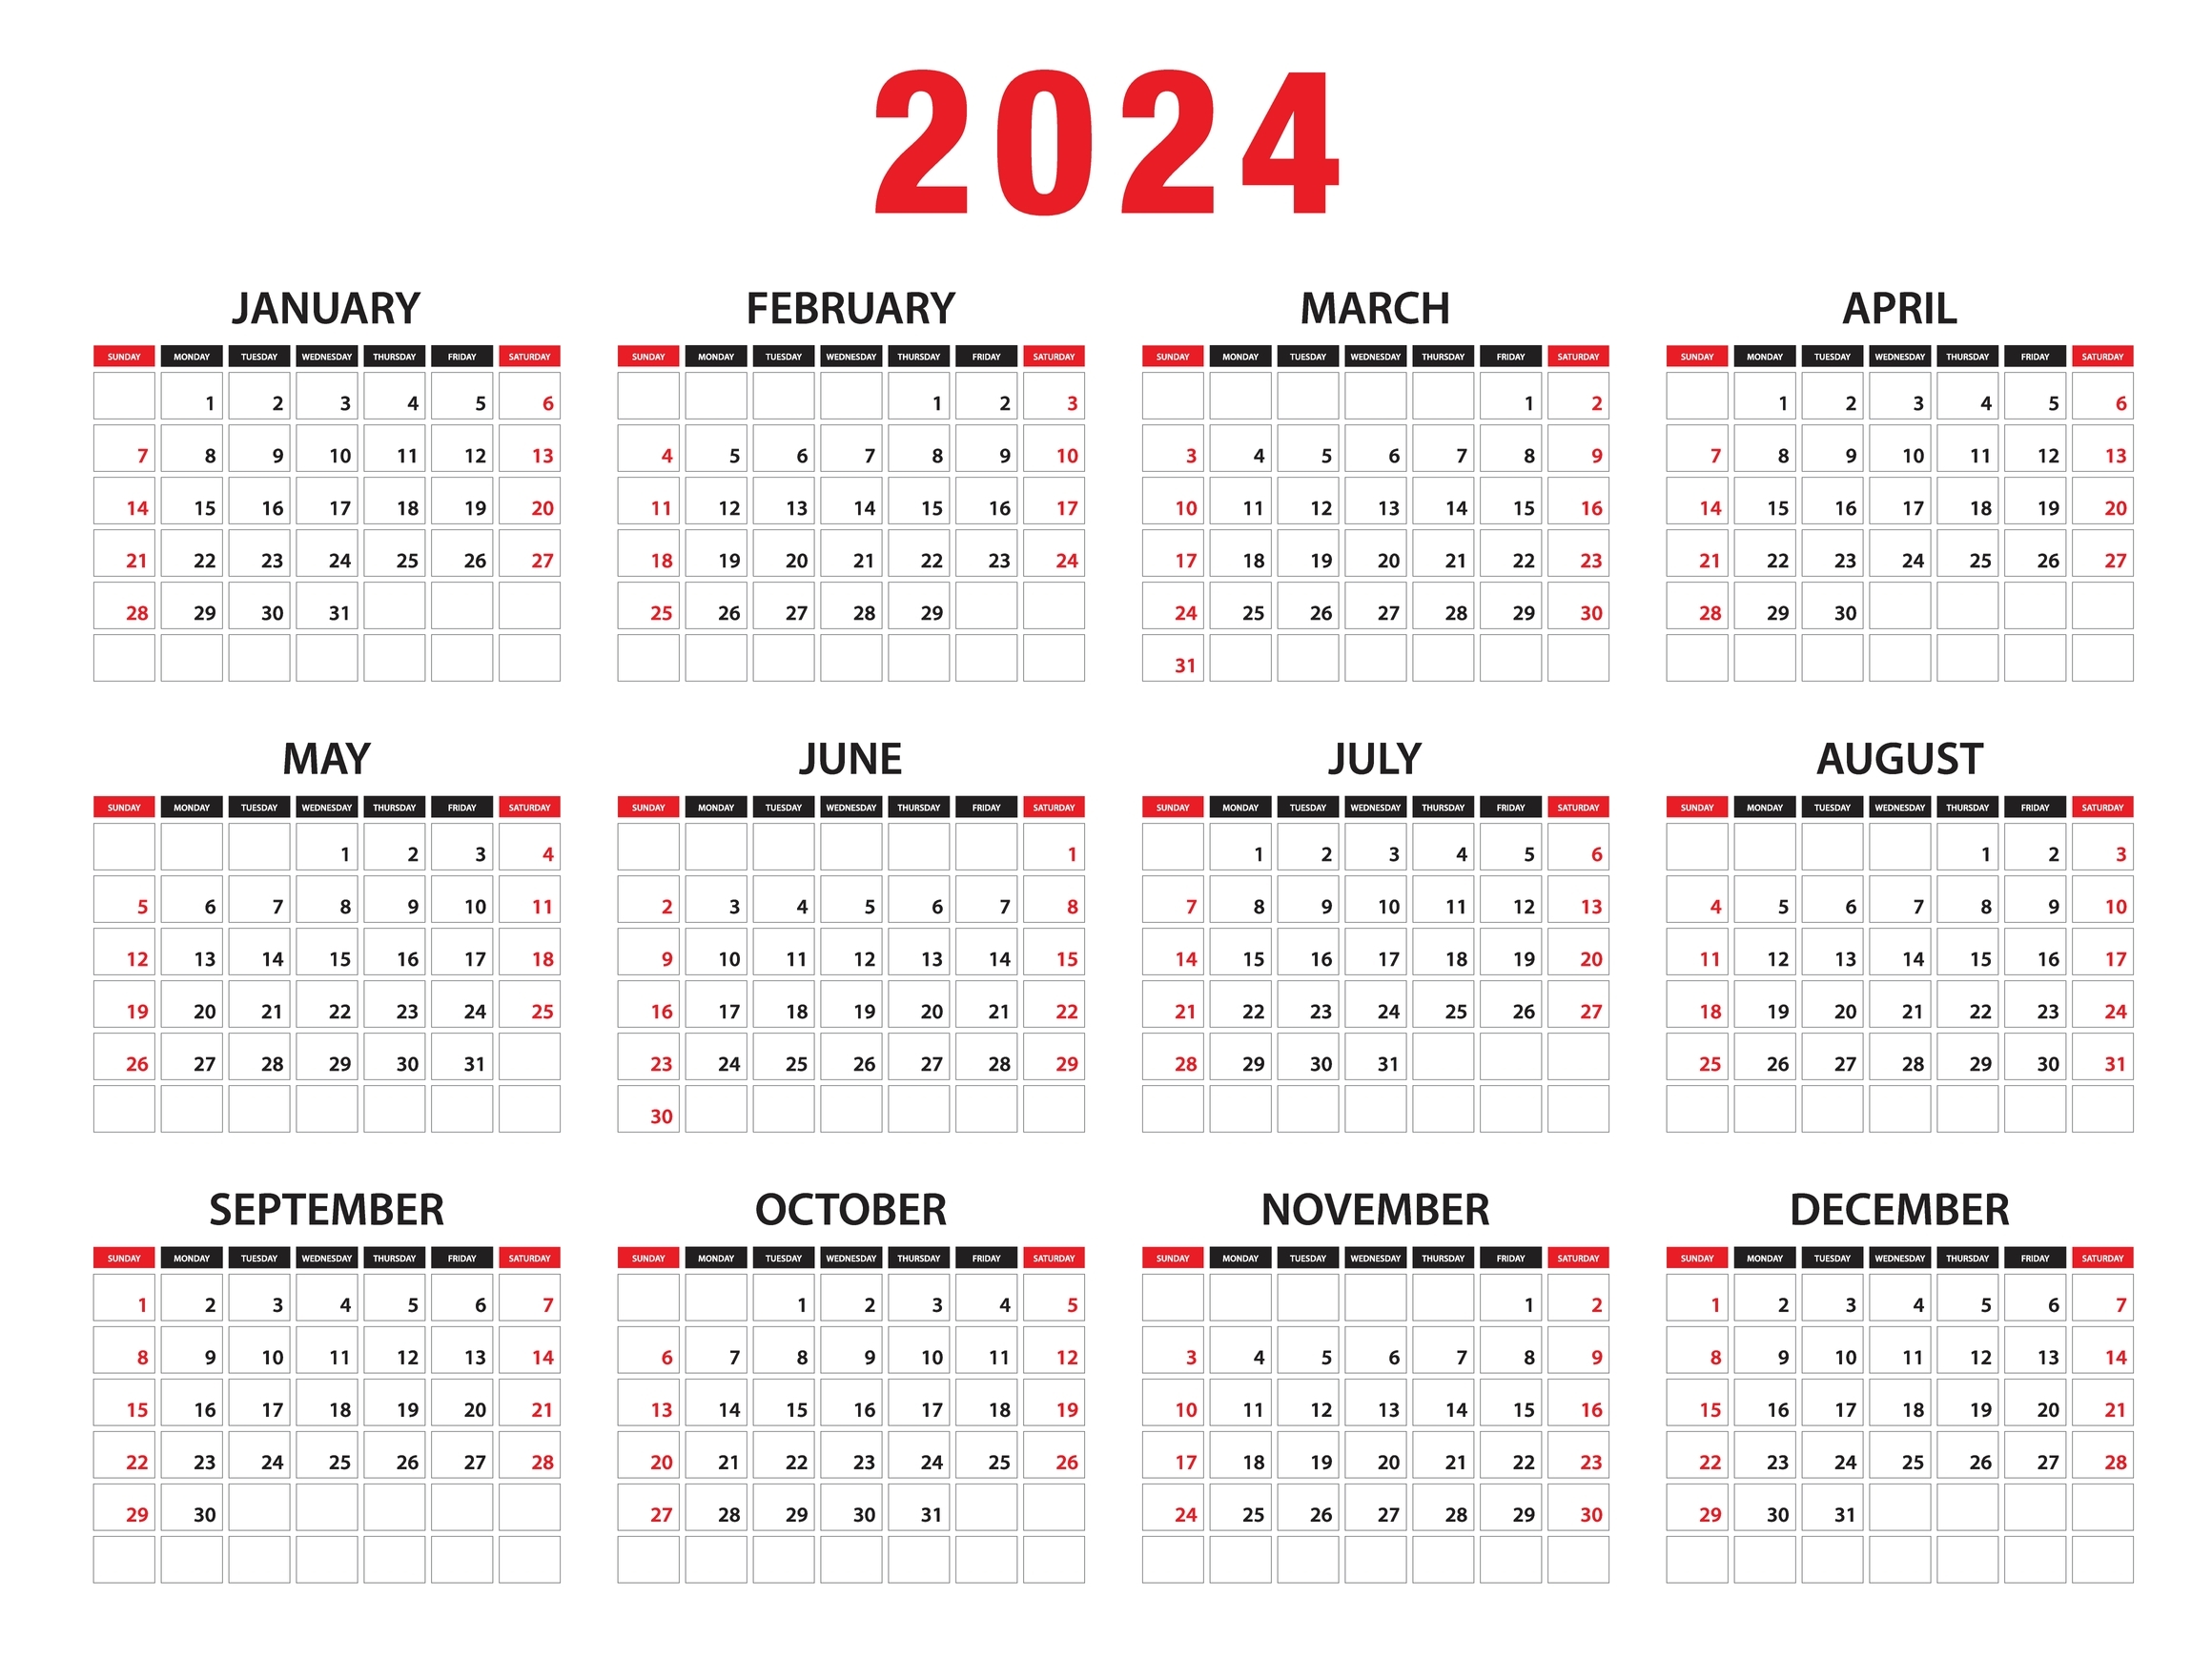 2024 VA Disability Pay Dates Calendar